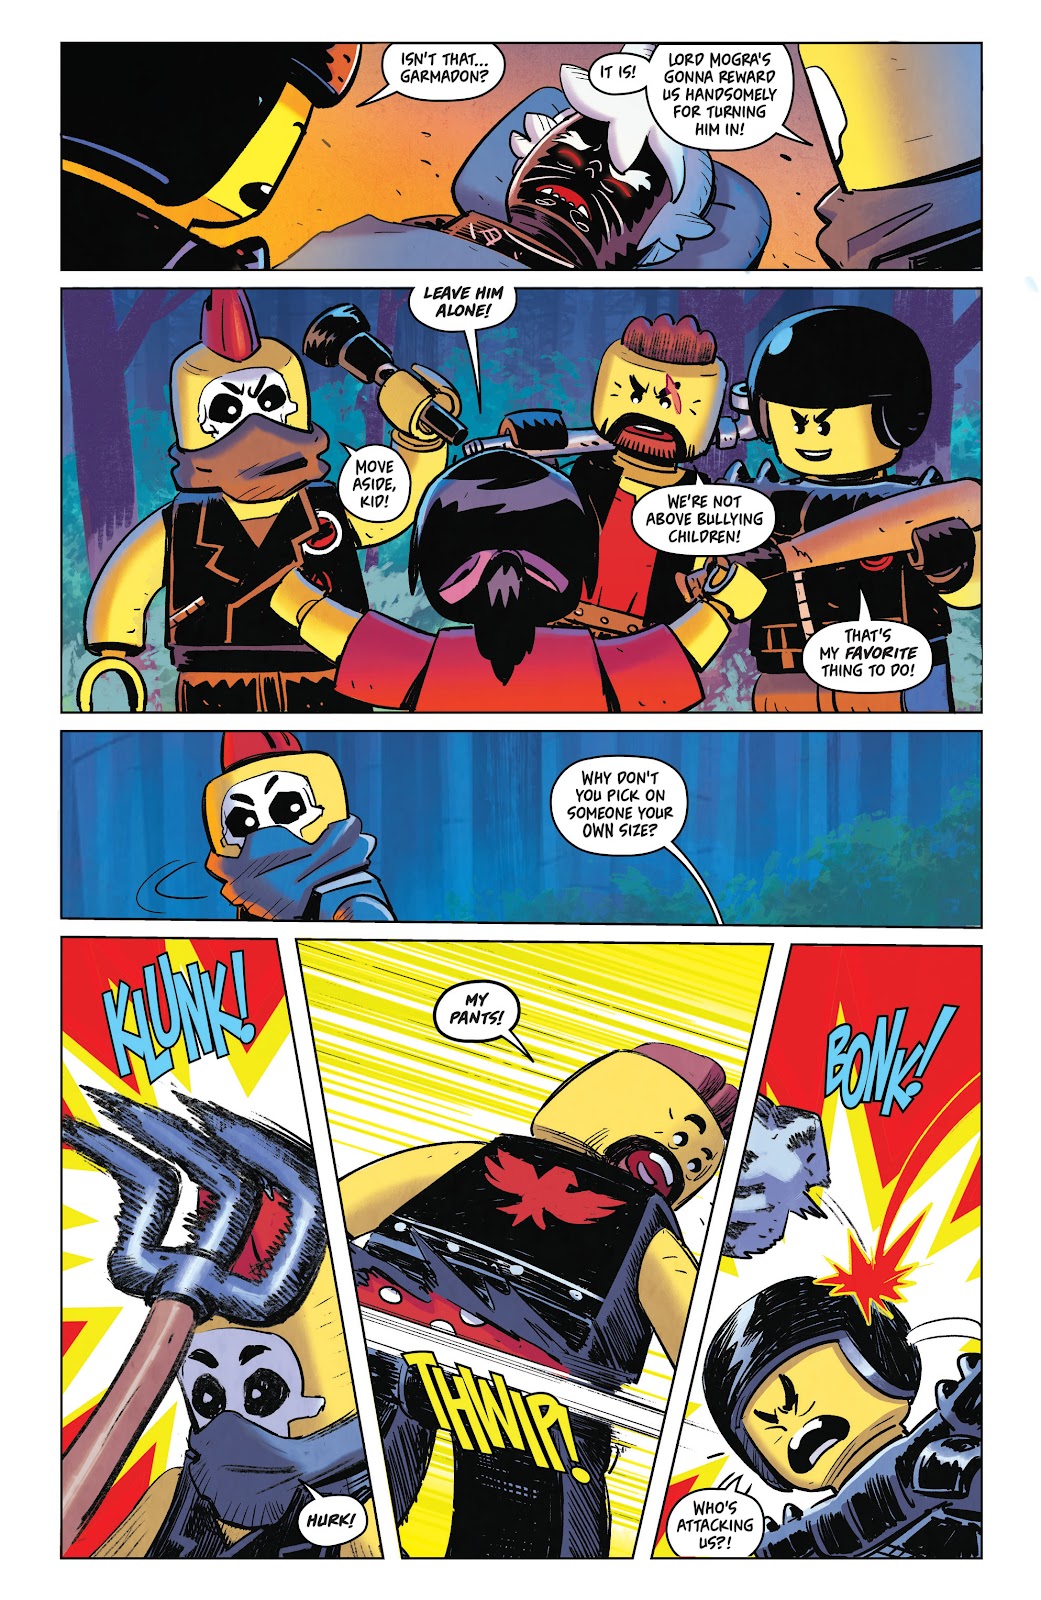 Lego Ninjago: Garmadon issue 4 - Page 14